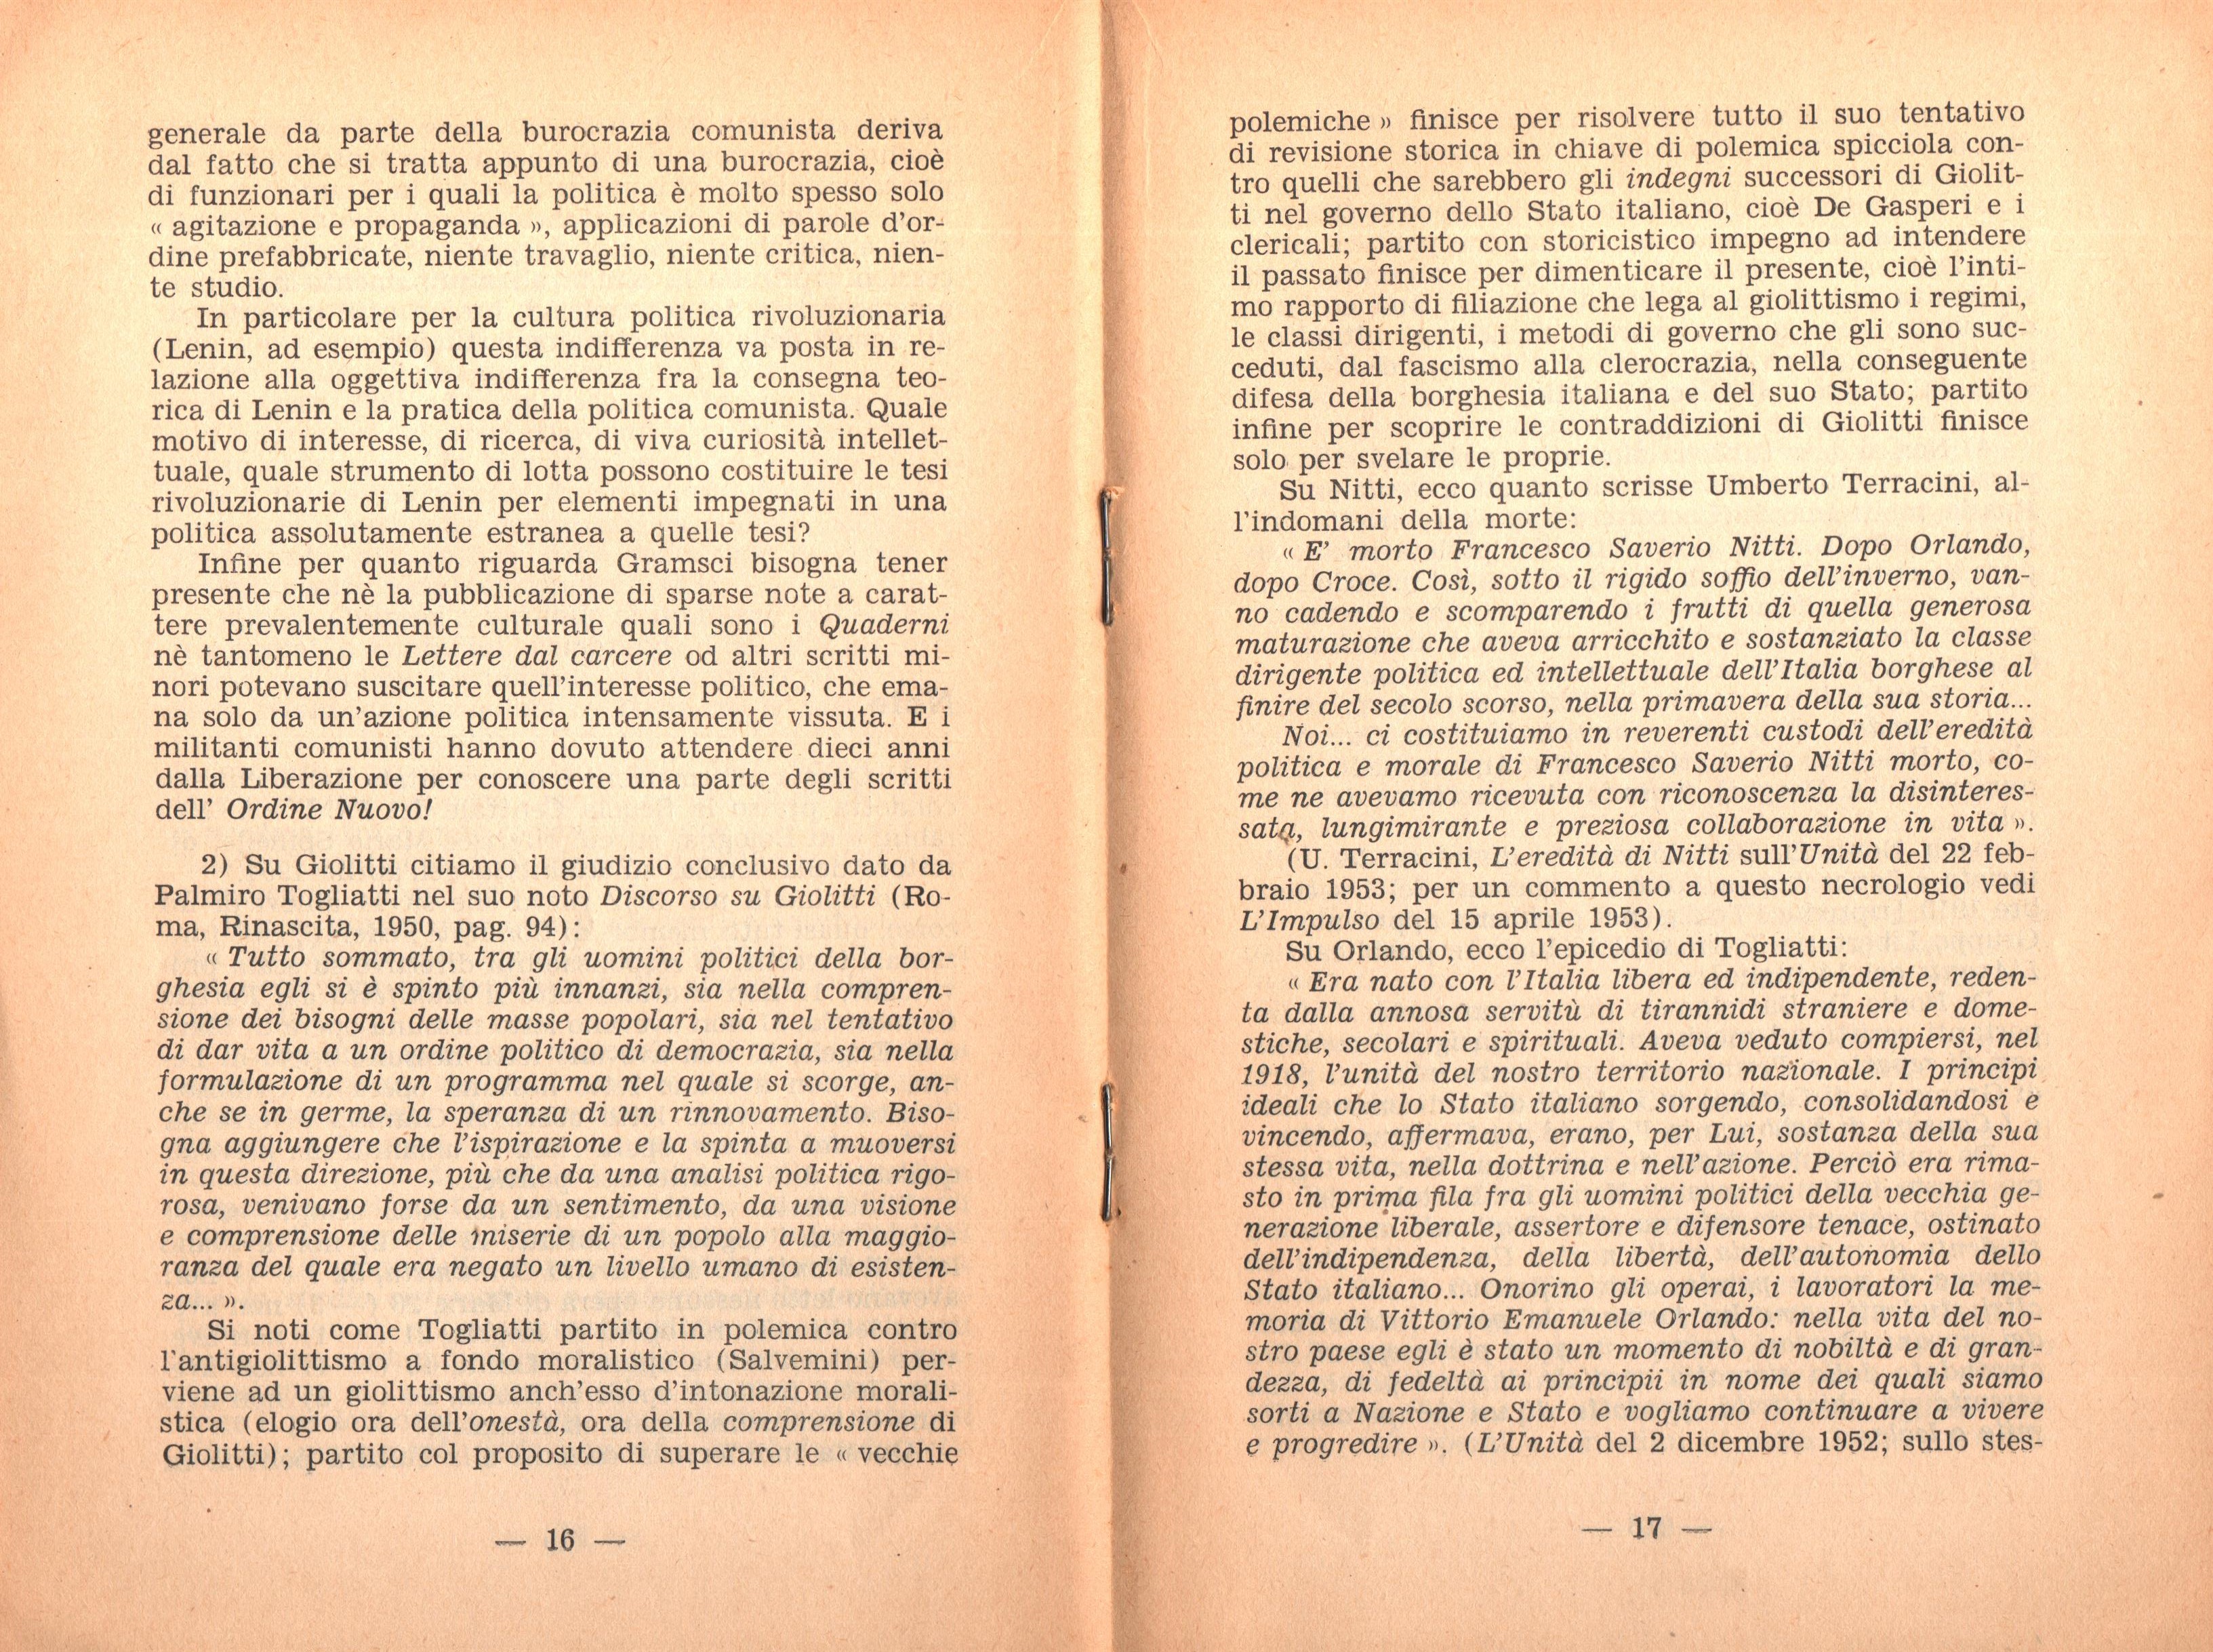 Pier Carlo Masini, Antonio Gramsci - pag. 10